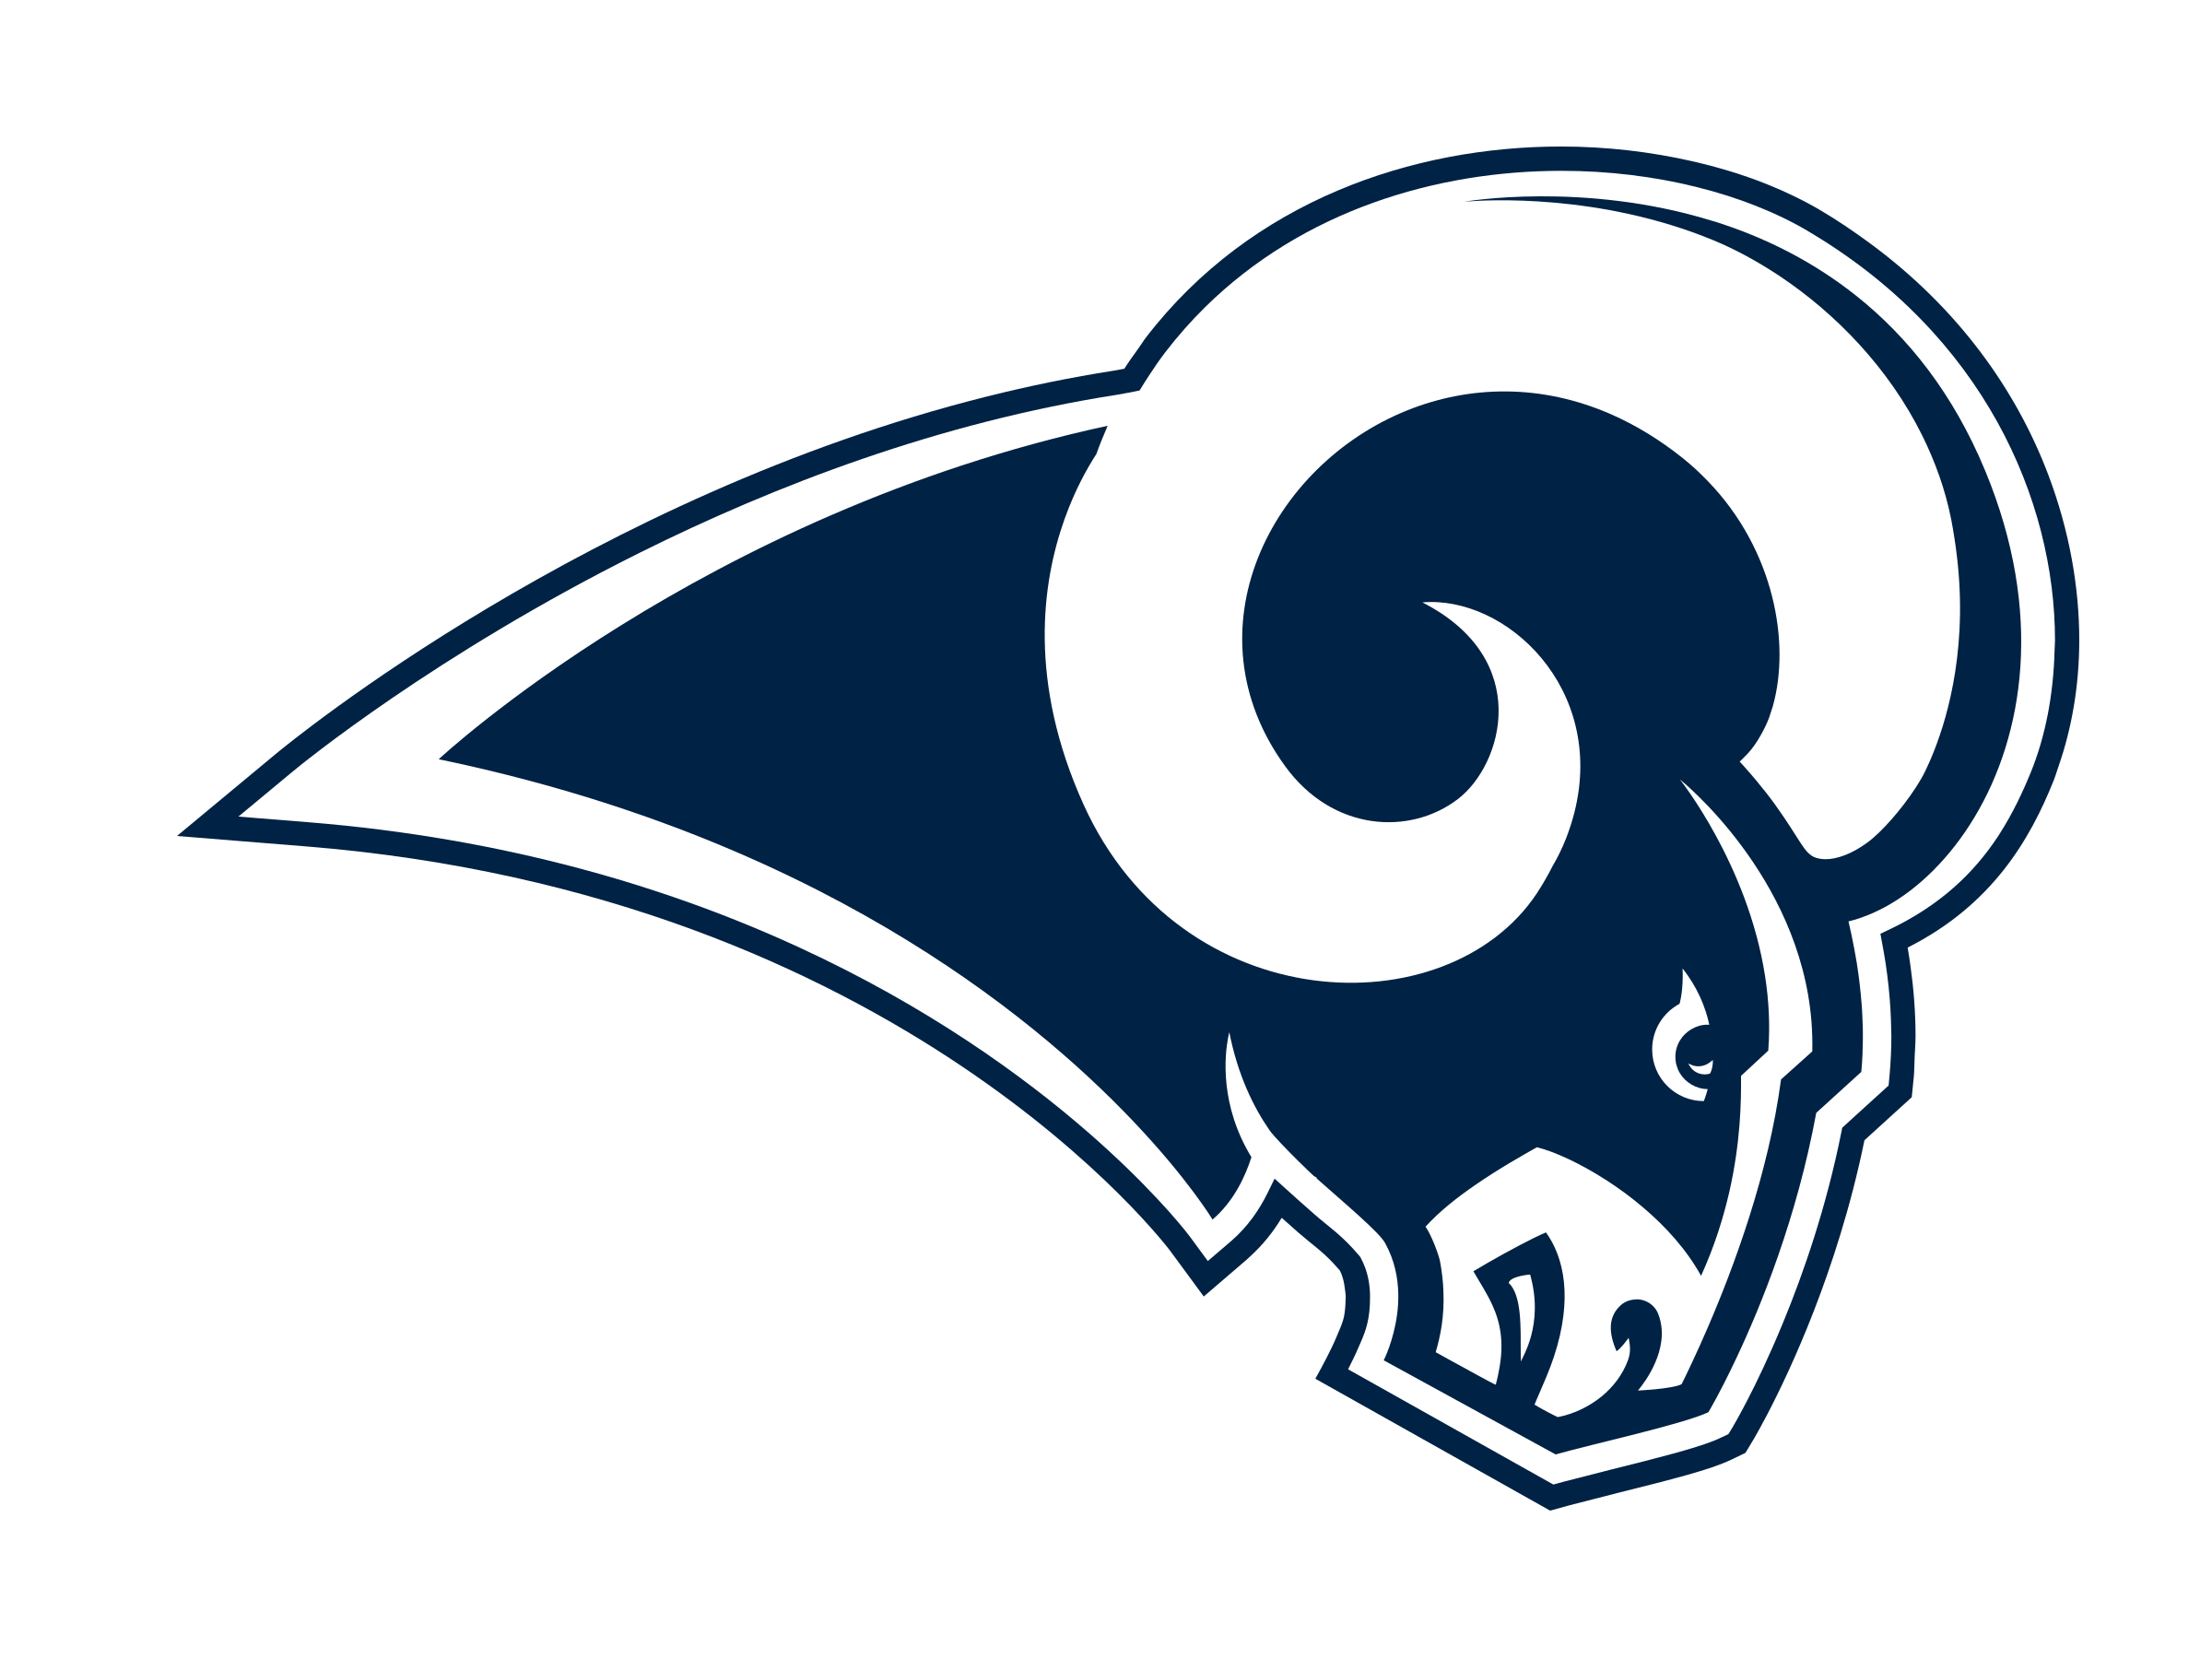 Rams Helmet Logo - Los Angeles Rams Logo PNG Transparent & SVG Vector - Freebie Supply